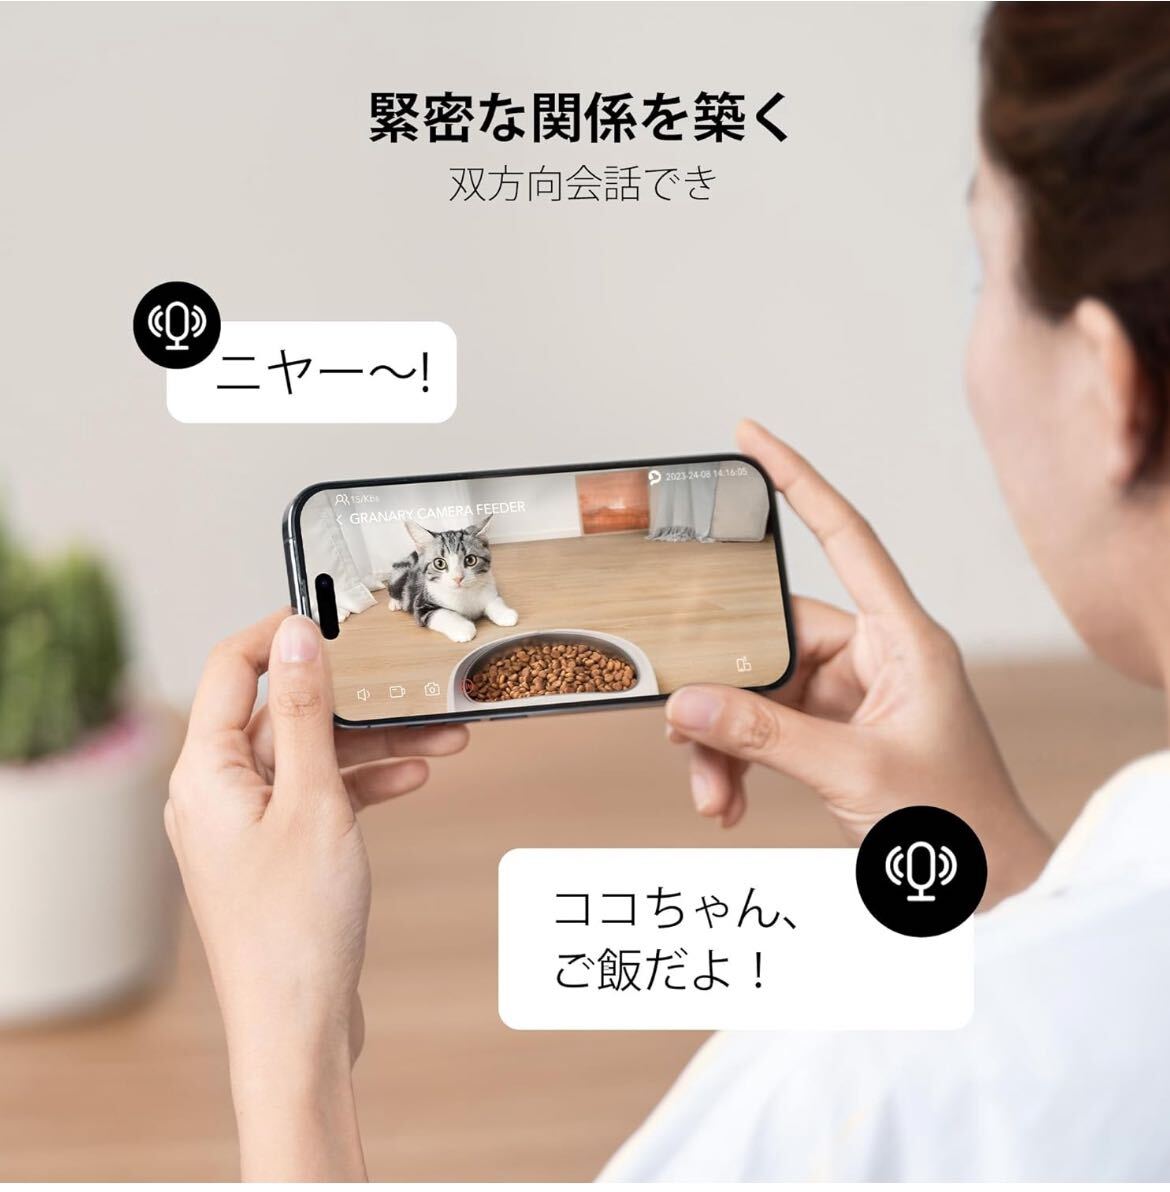 PETLIBRO 自動給餌器 猫 犬 カメラ付き 1080P 暗視機能 5G WiFi フード残量不足検知 詰まり防止センサー 動体検知 音声検知 スマホ遠隔